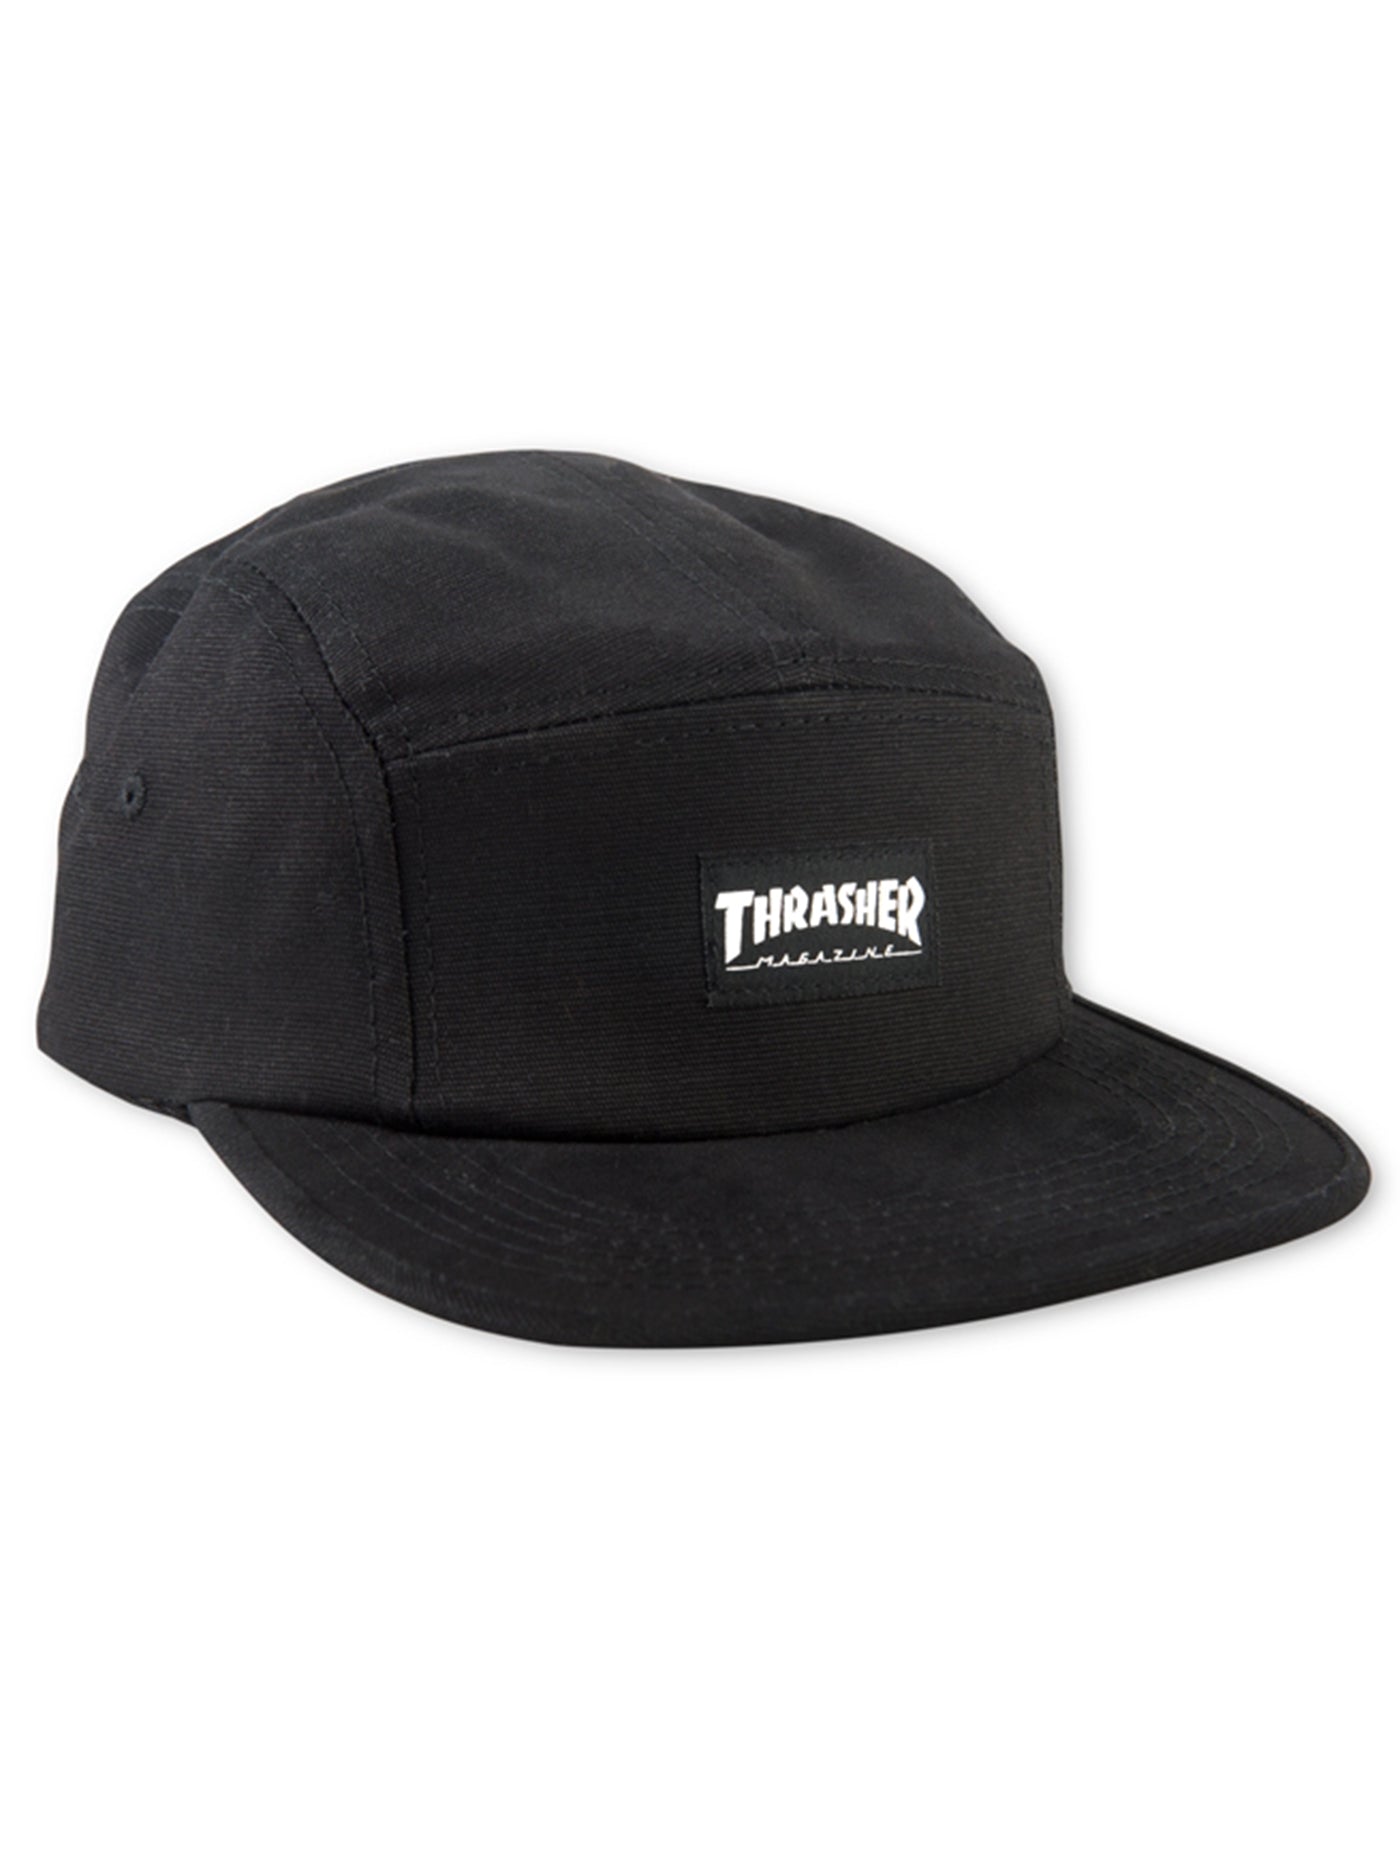 Thrasher 5 Panel Black Strapback Hat